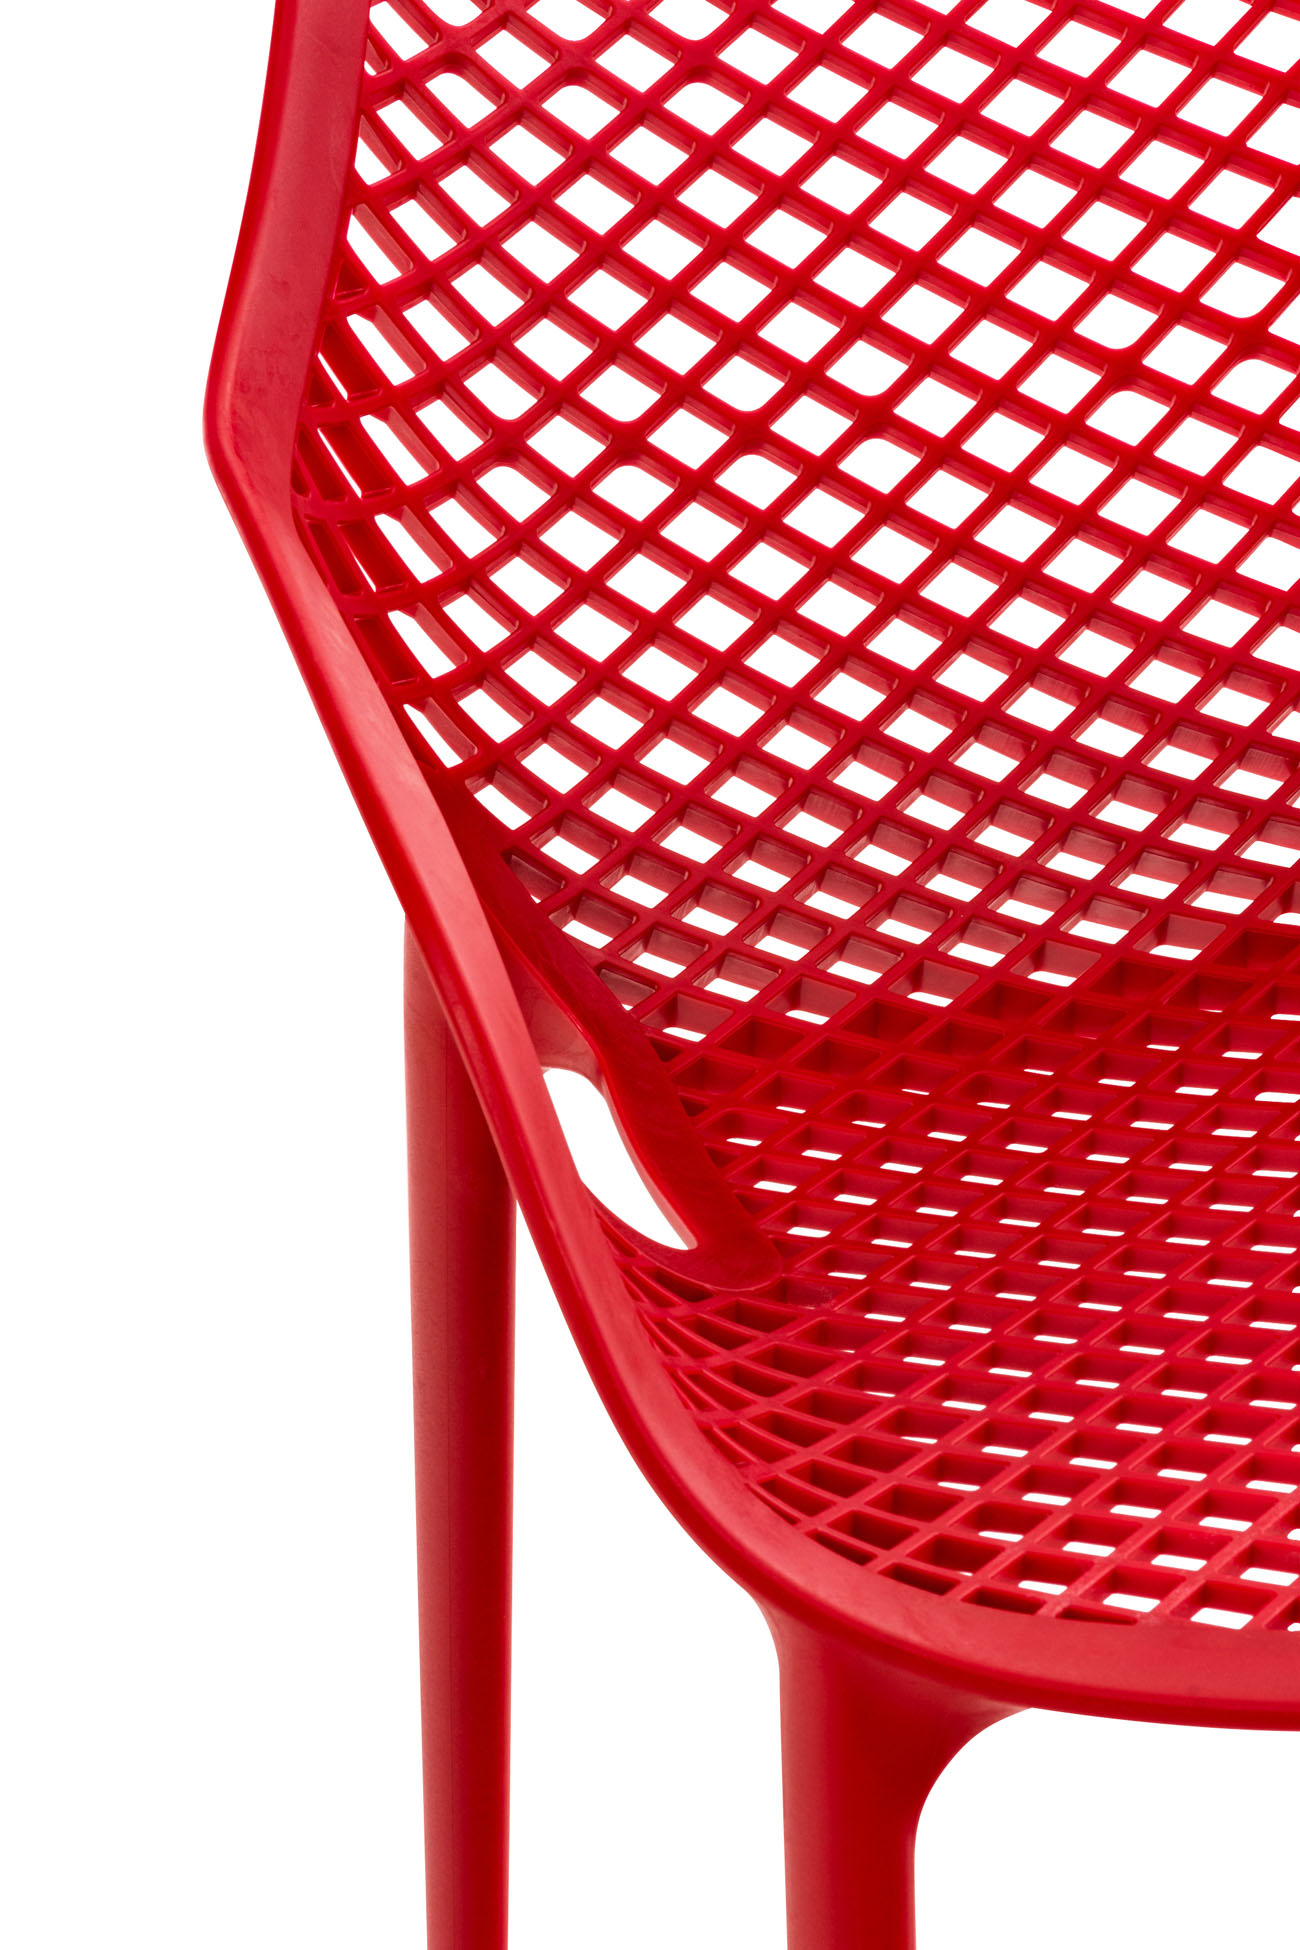 Stapelbarer Stuhl Air XL rot